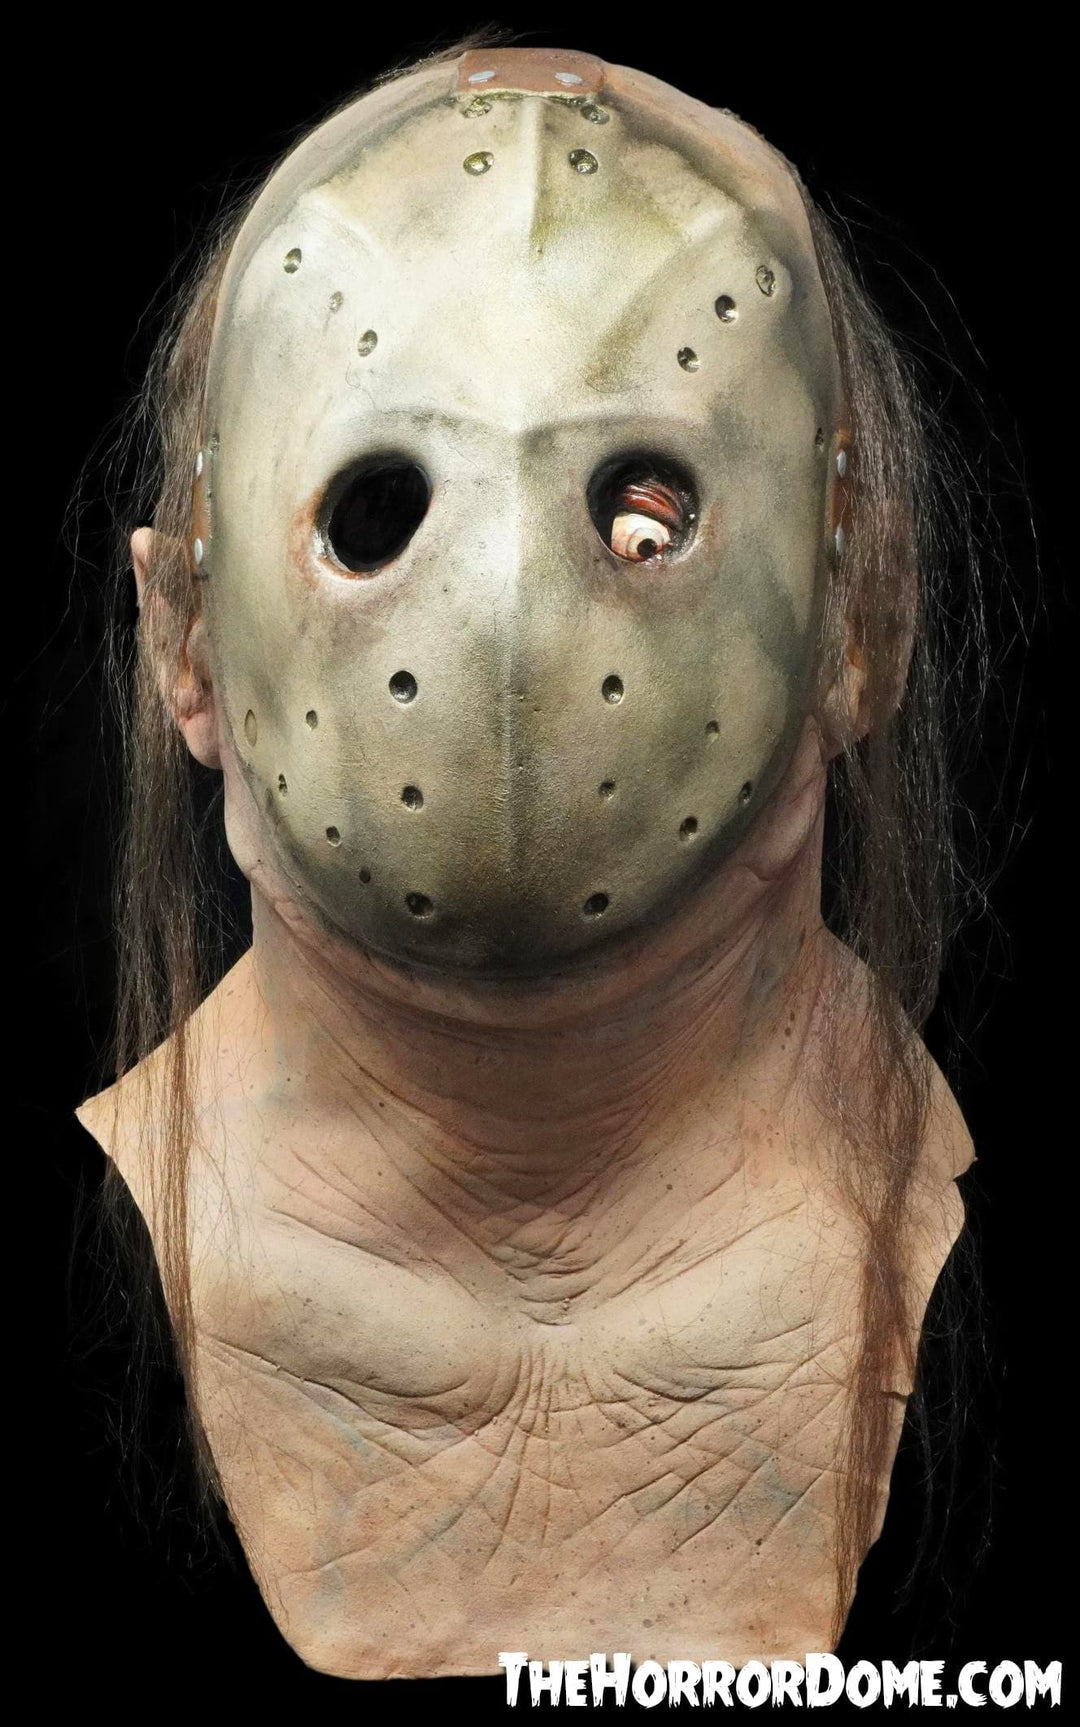 NEW for 2021 "The Killer" HD Studios Pro Halloween Mask